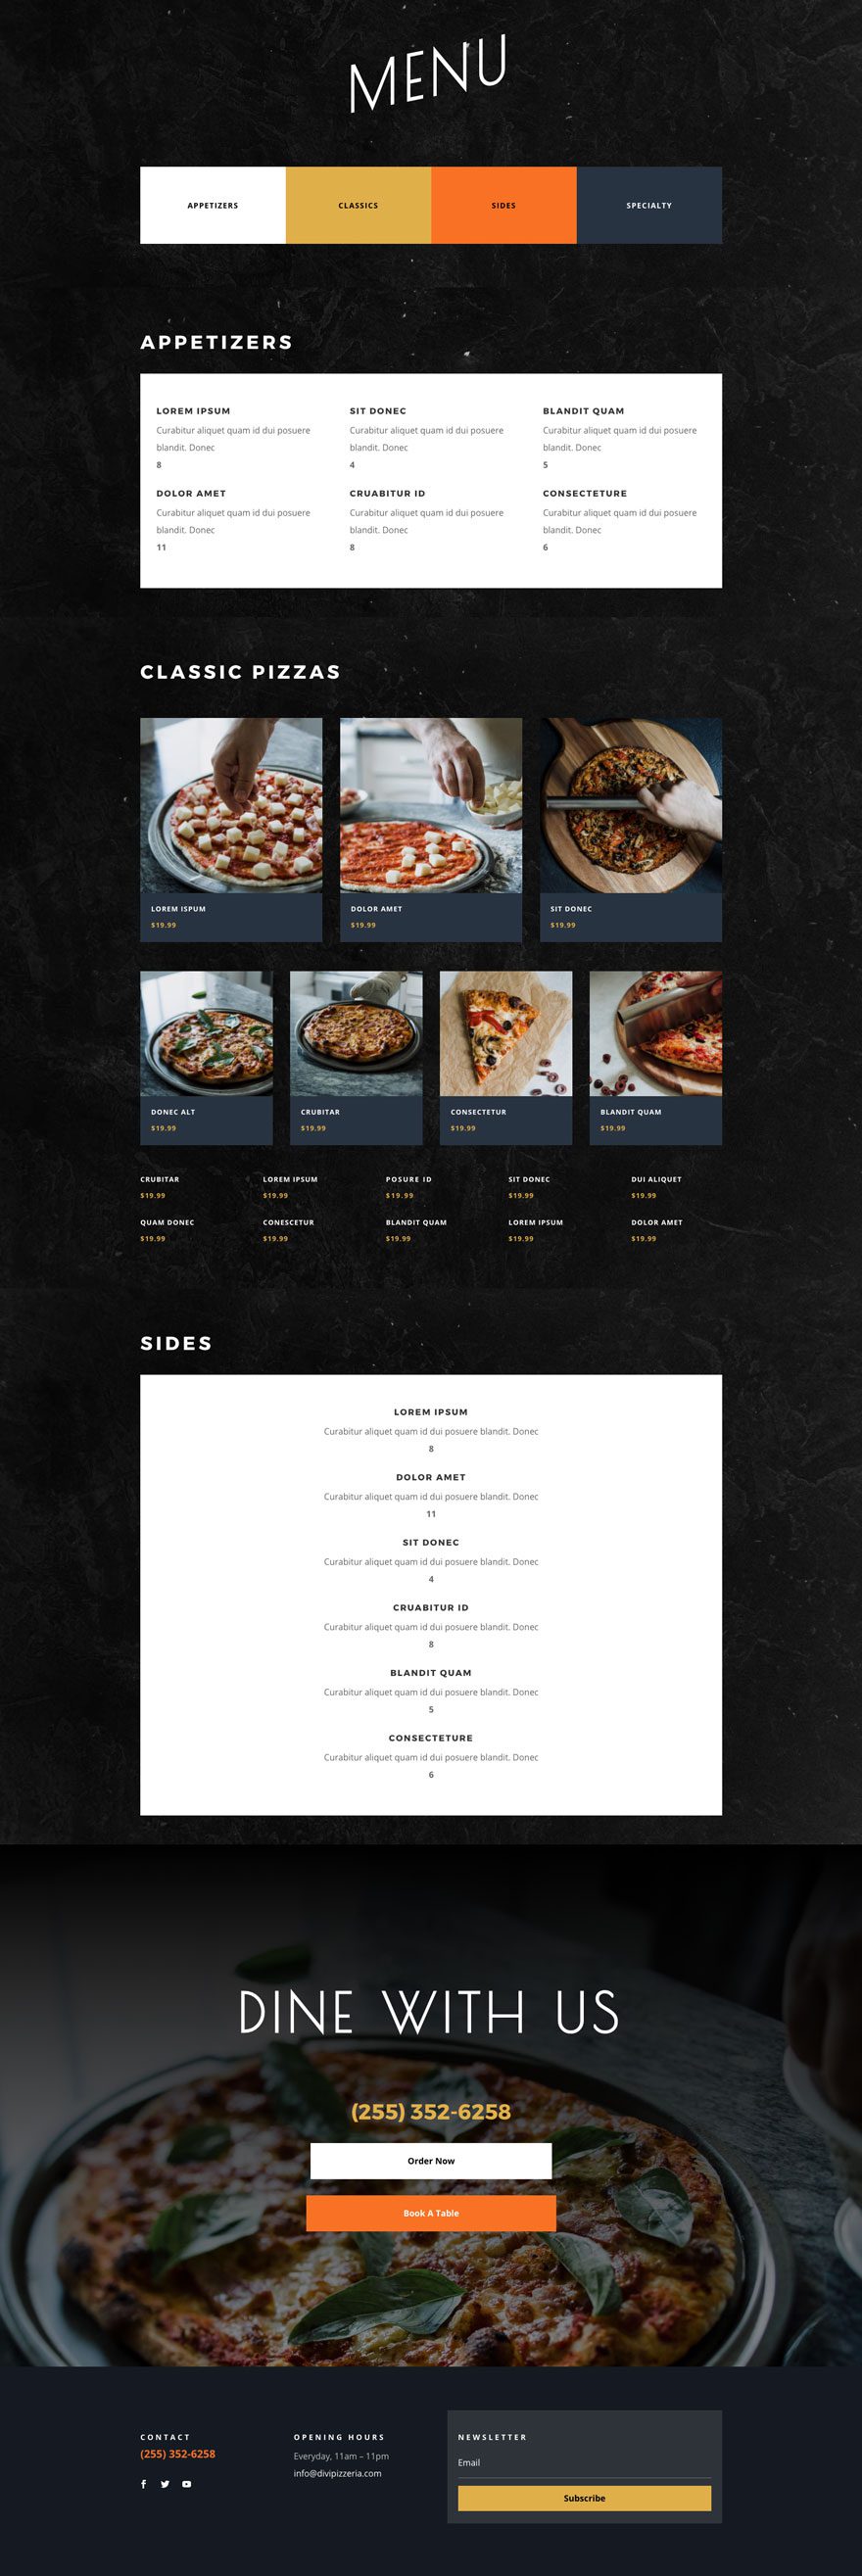 pizzeria website